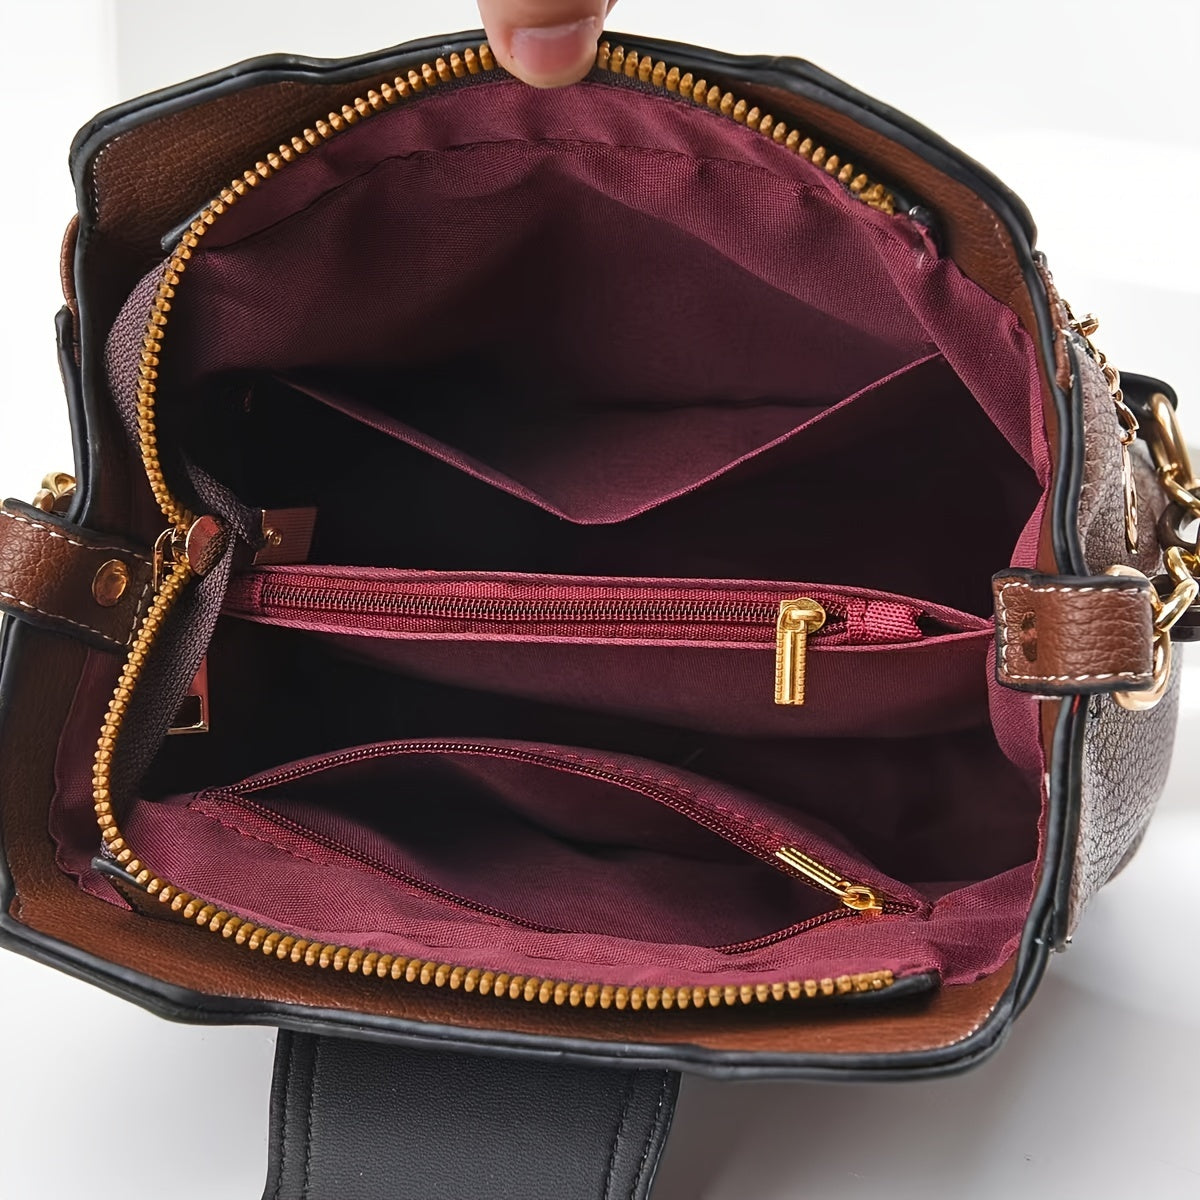 realaiotMini Fashion Crossbody Bag, Trendy Shoulder Bag, Women's Casual Handbag & Purse